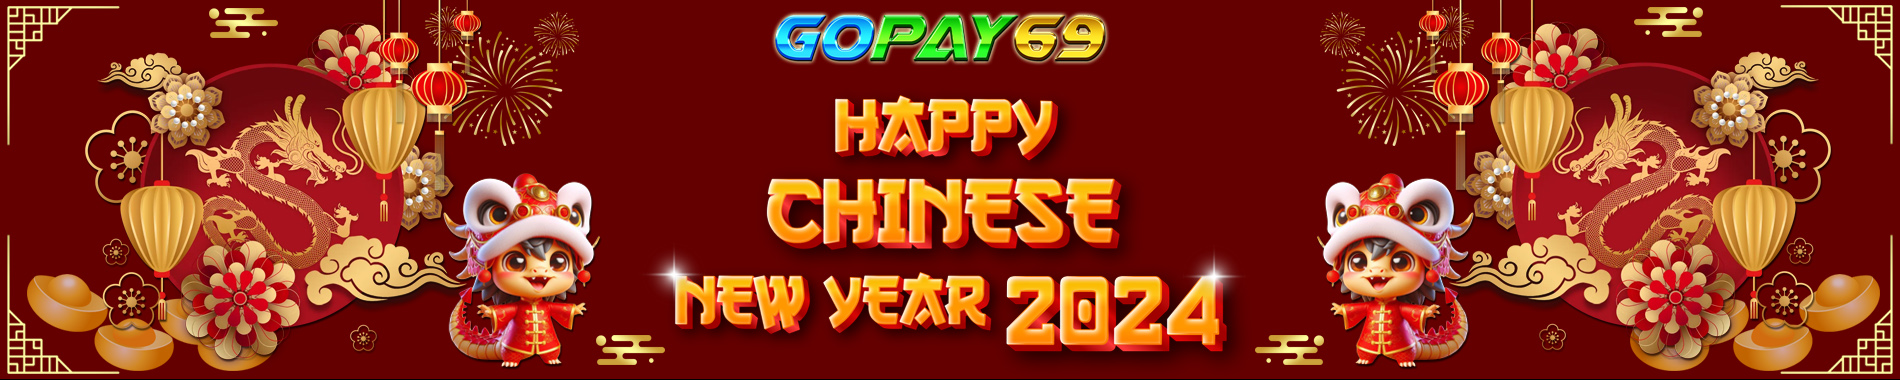 gopay69 - happy chinese new year 2024